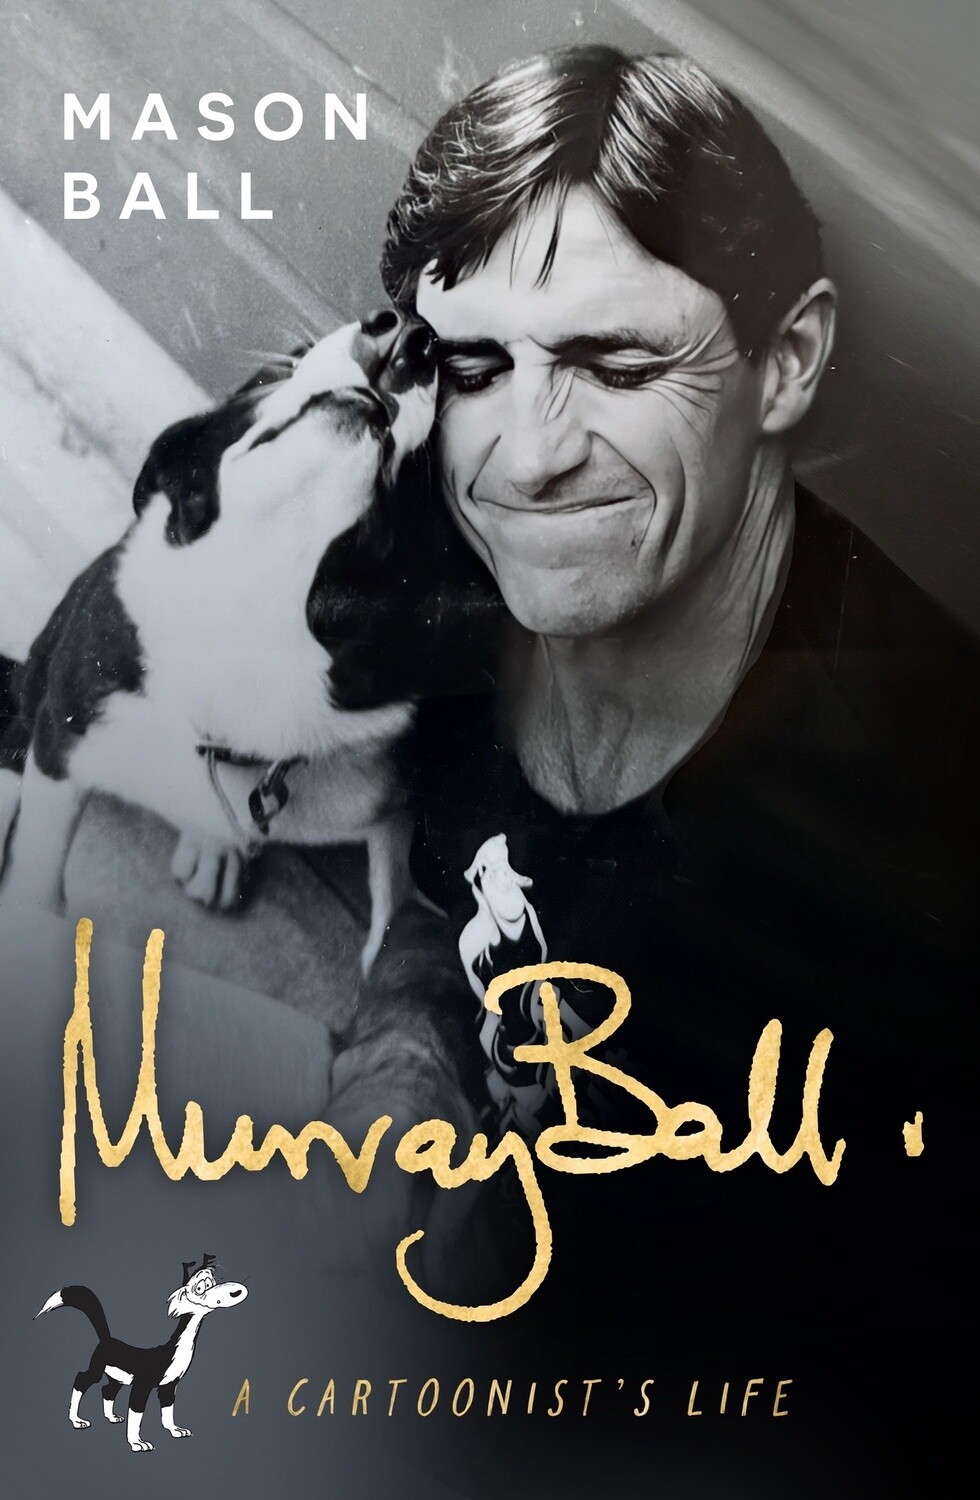 Murray Ball: A Cartoonist's Life by Mason Ball